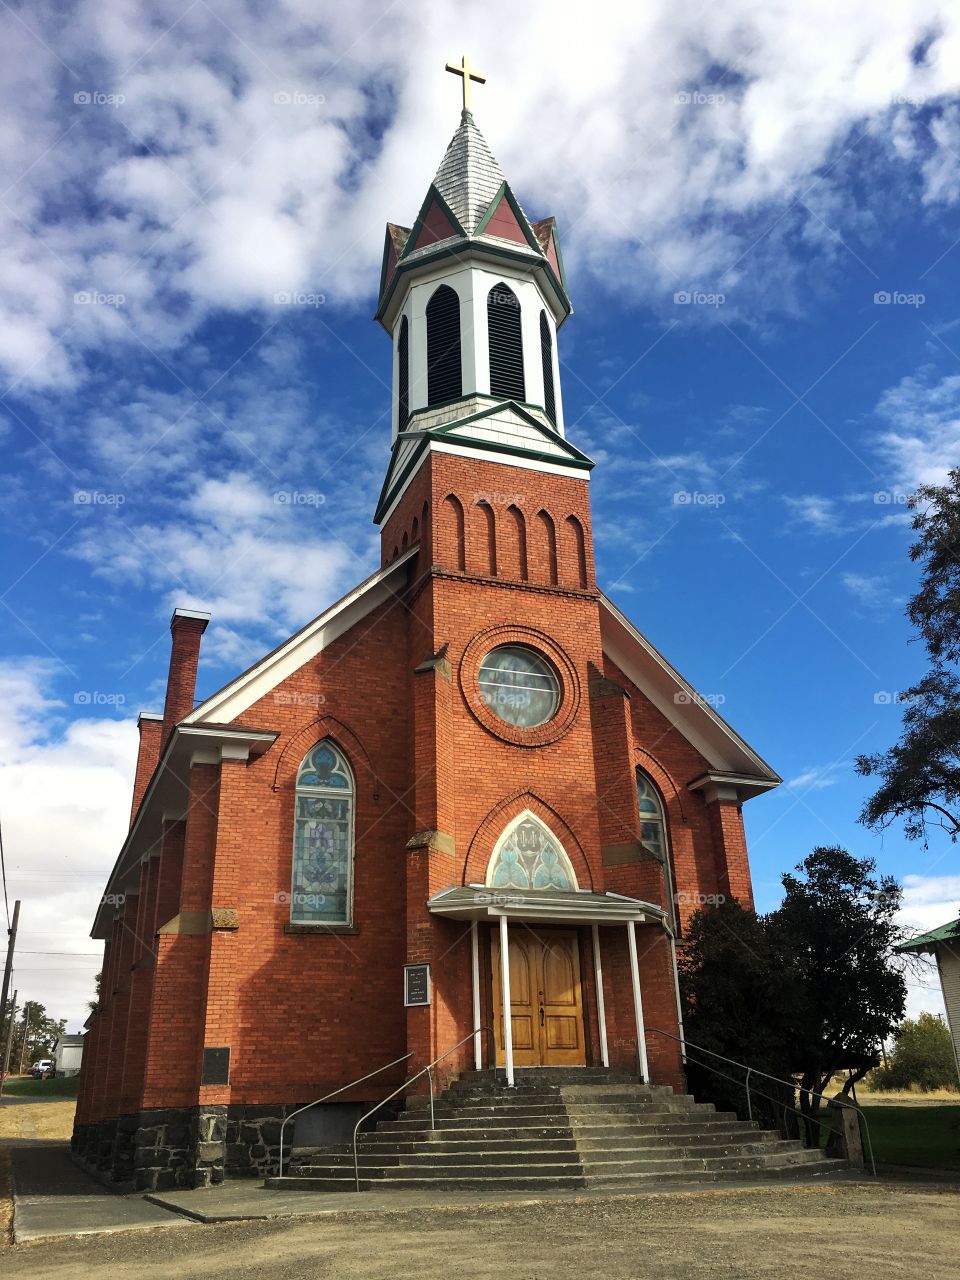 Old Catholic Church in Sprague, WA